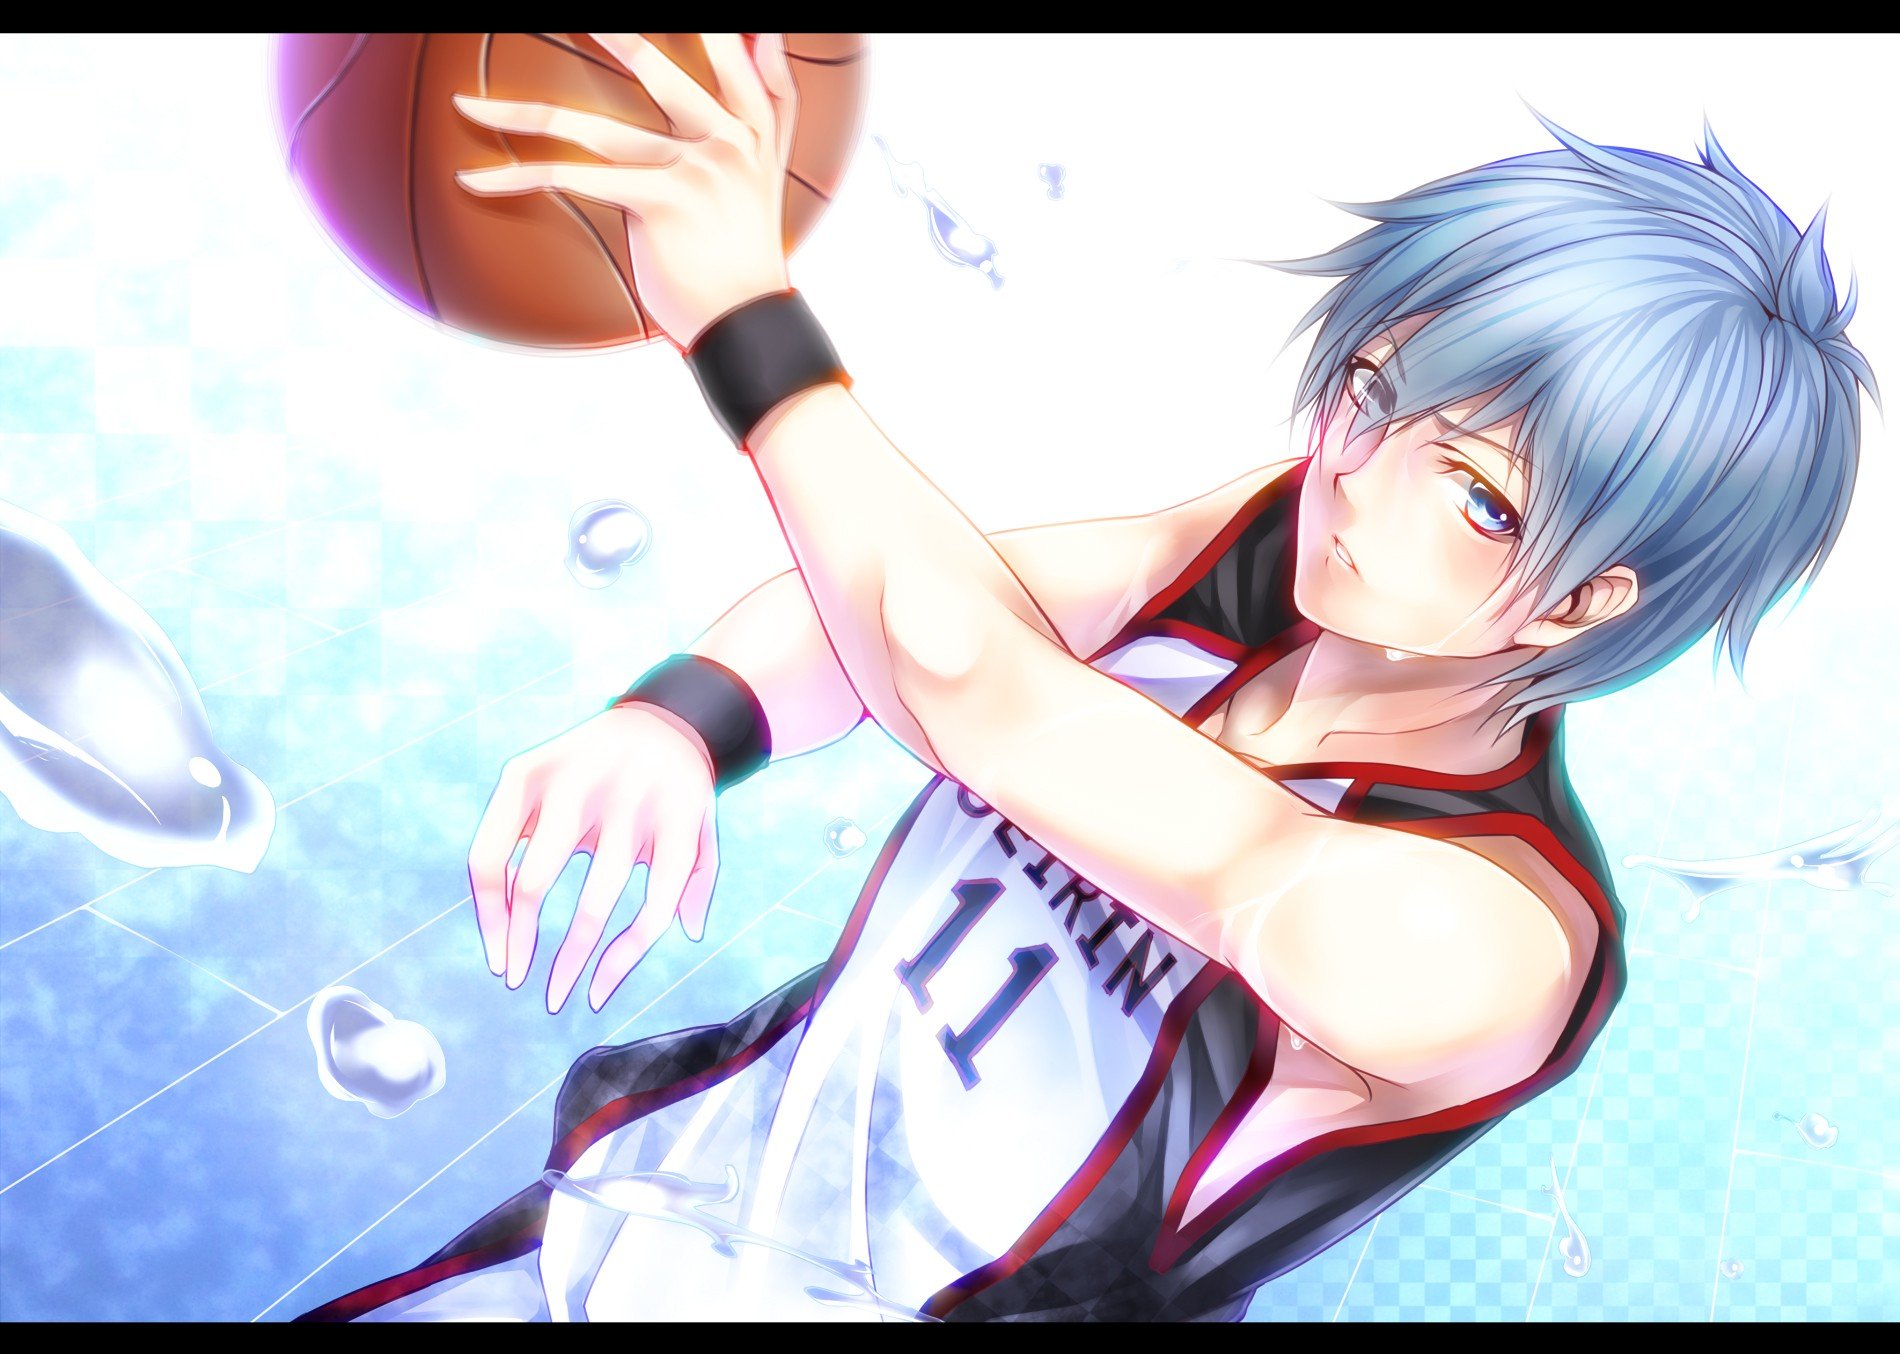 5. "Kuroko's Basketball" - wide 3